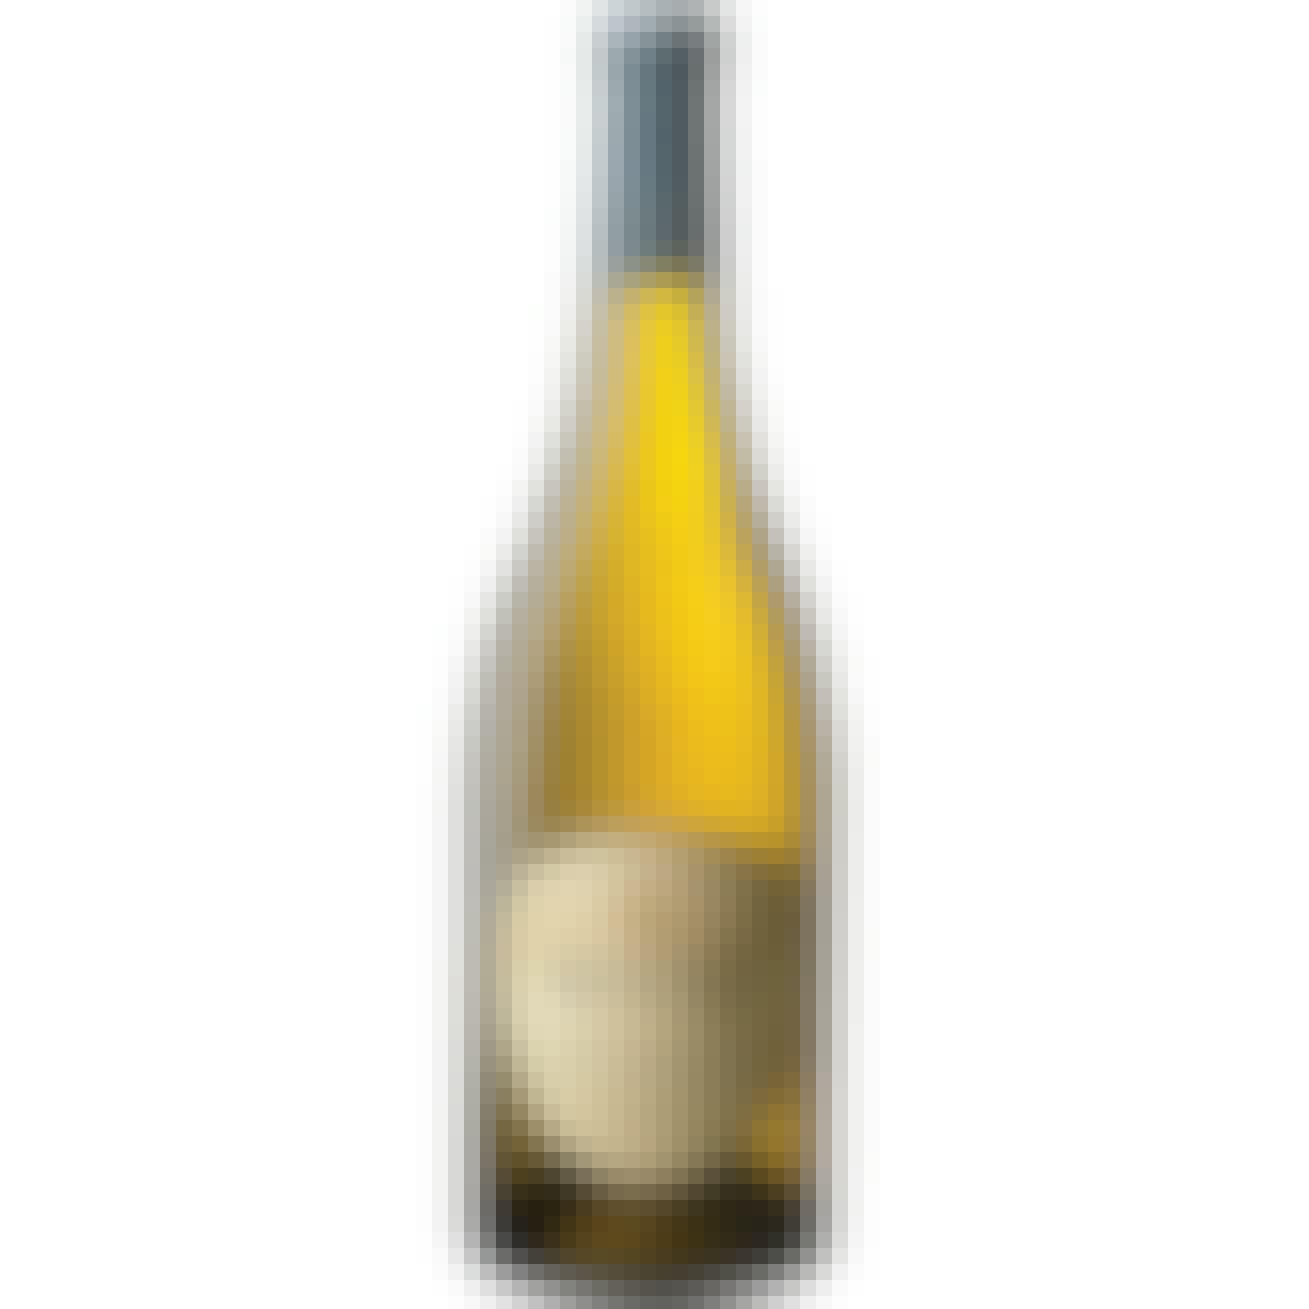 Bogle Chardonnay 2020 750ml